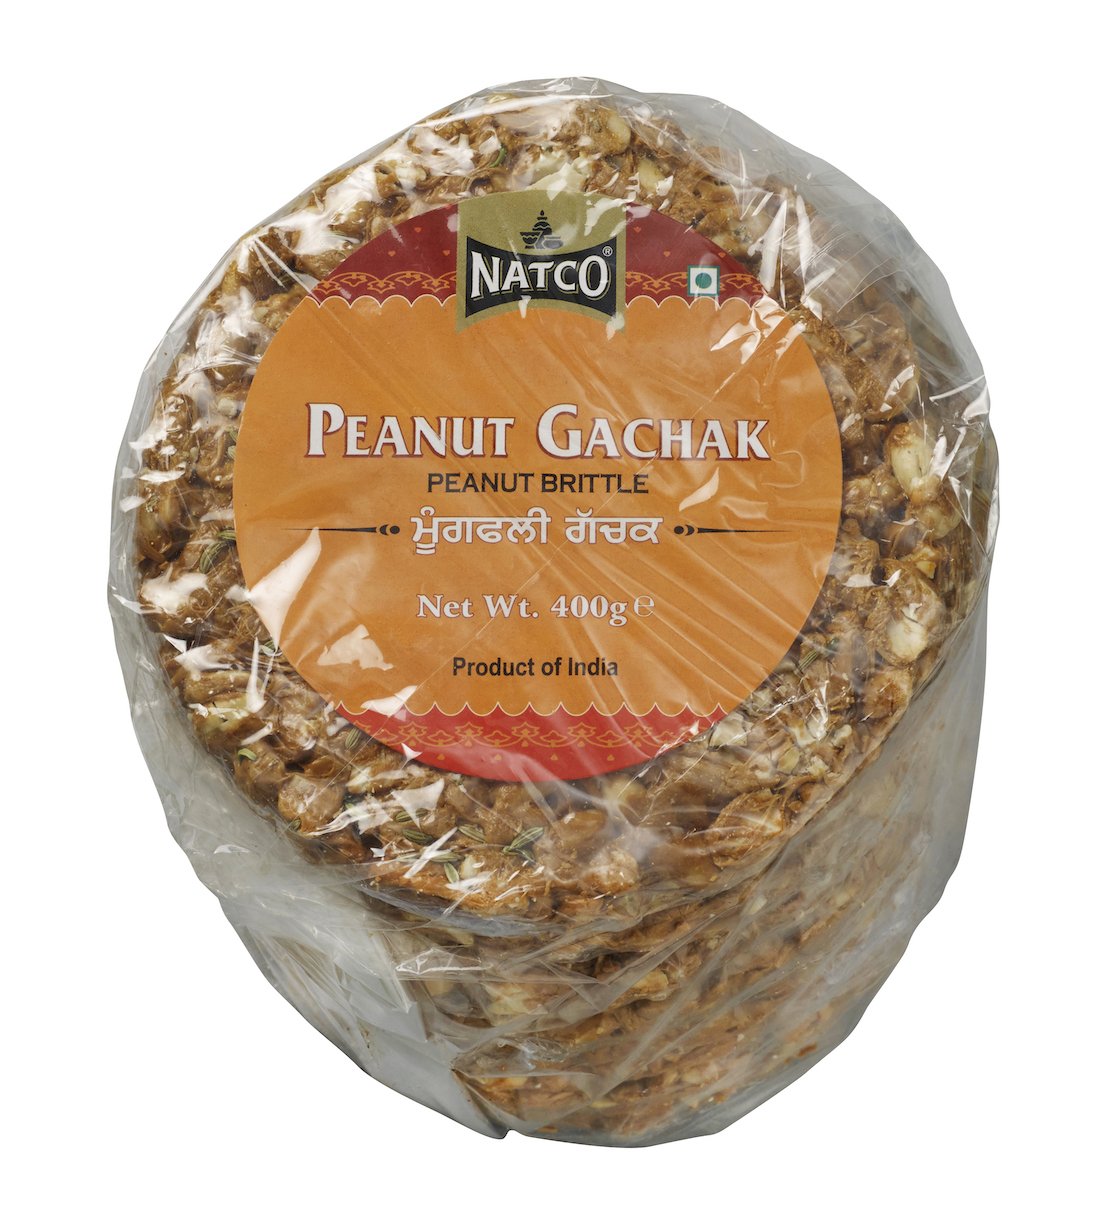 Peanut Gachak (Peanut Brittle) 400g